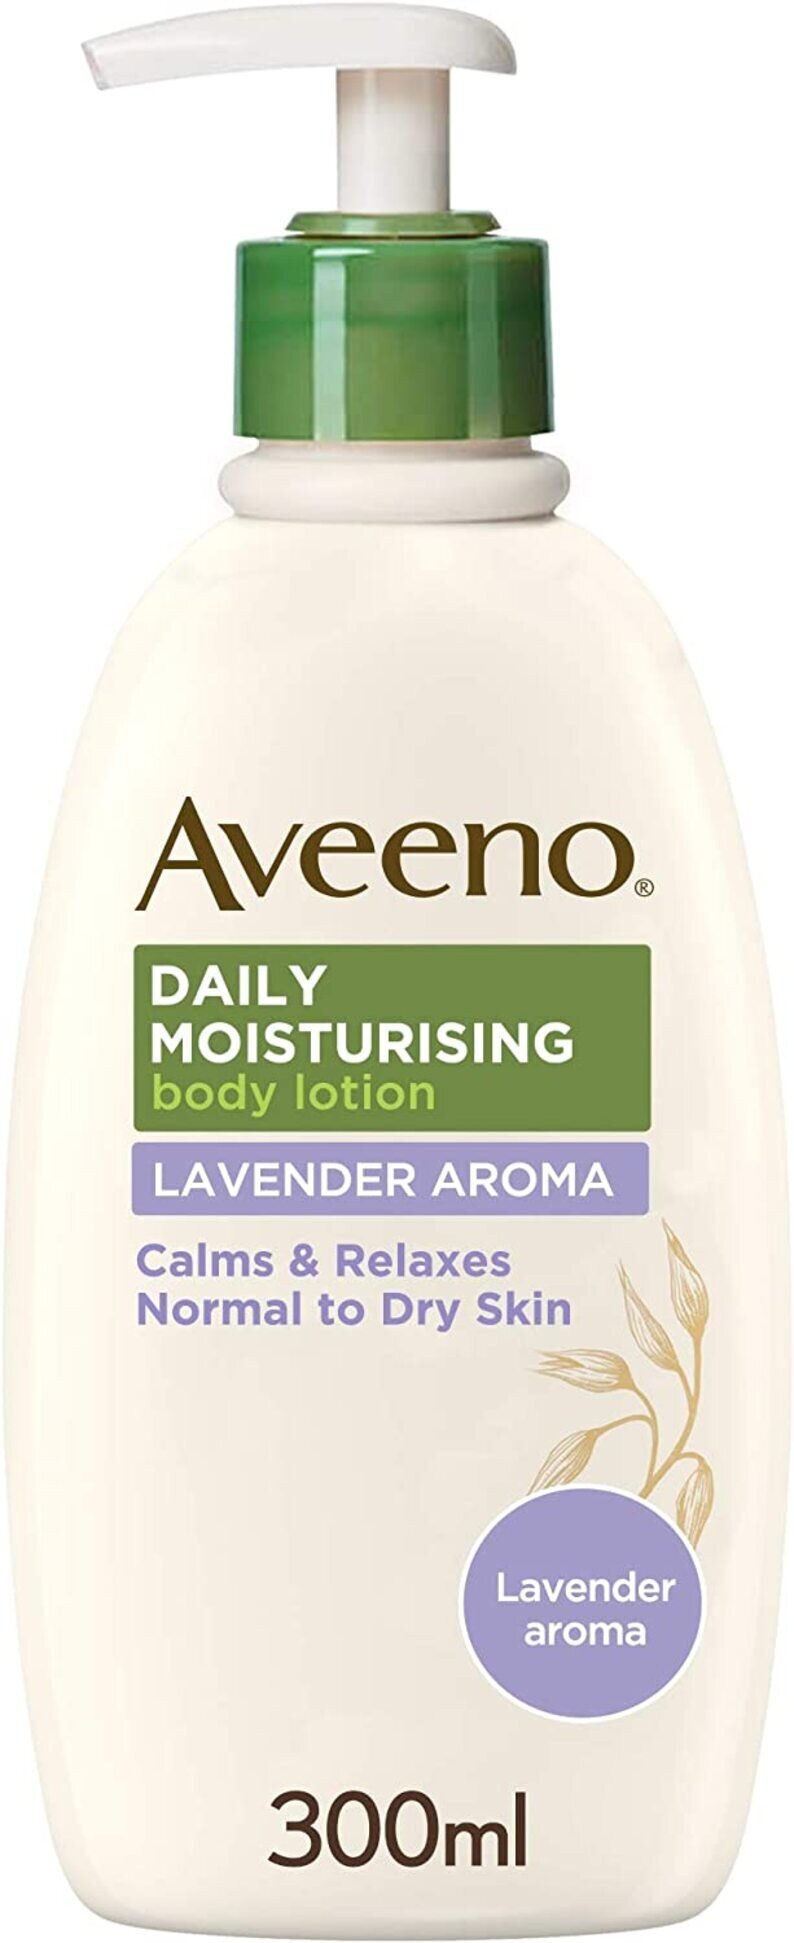 Aveeno Daily Moisturising Body Lotion With Lavender Aroma – 300ml